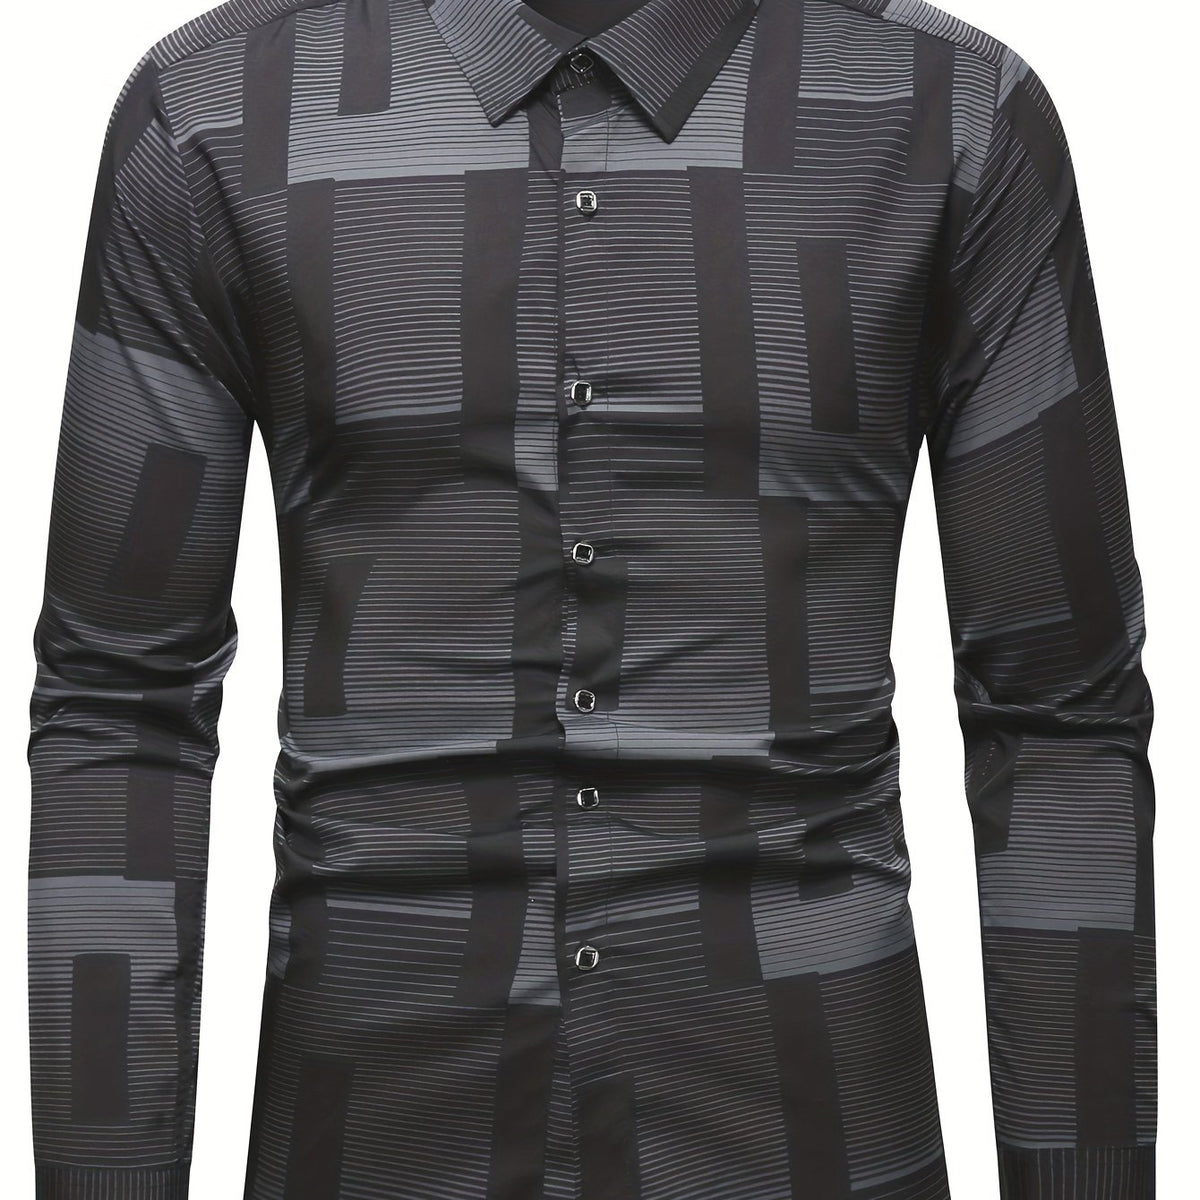 gbolsos  One Size Smaller,  Men's Plaid Print Long Sleeve Shirt